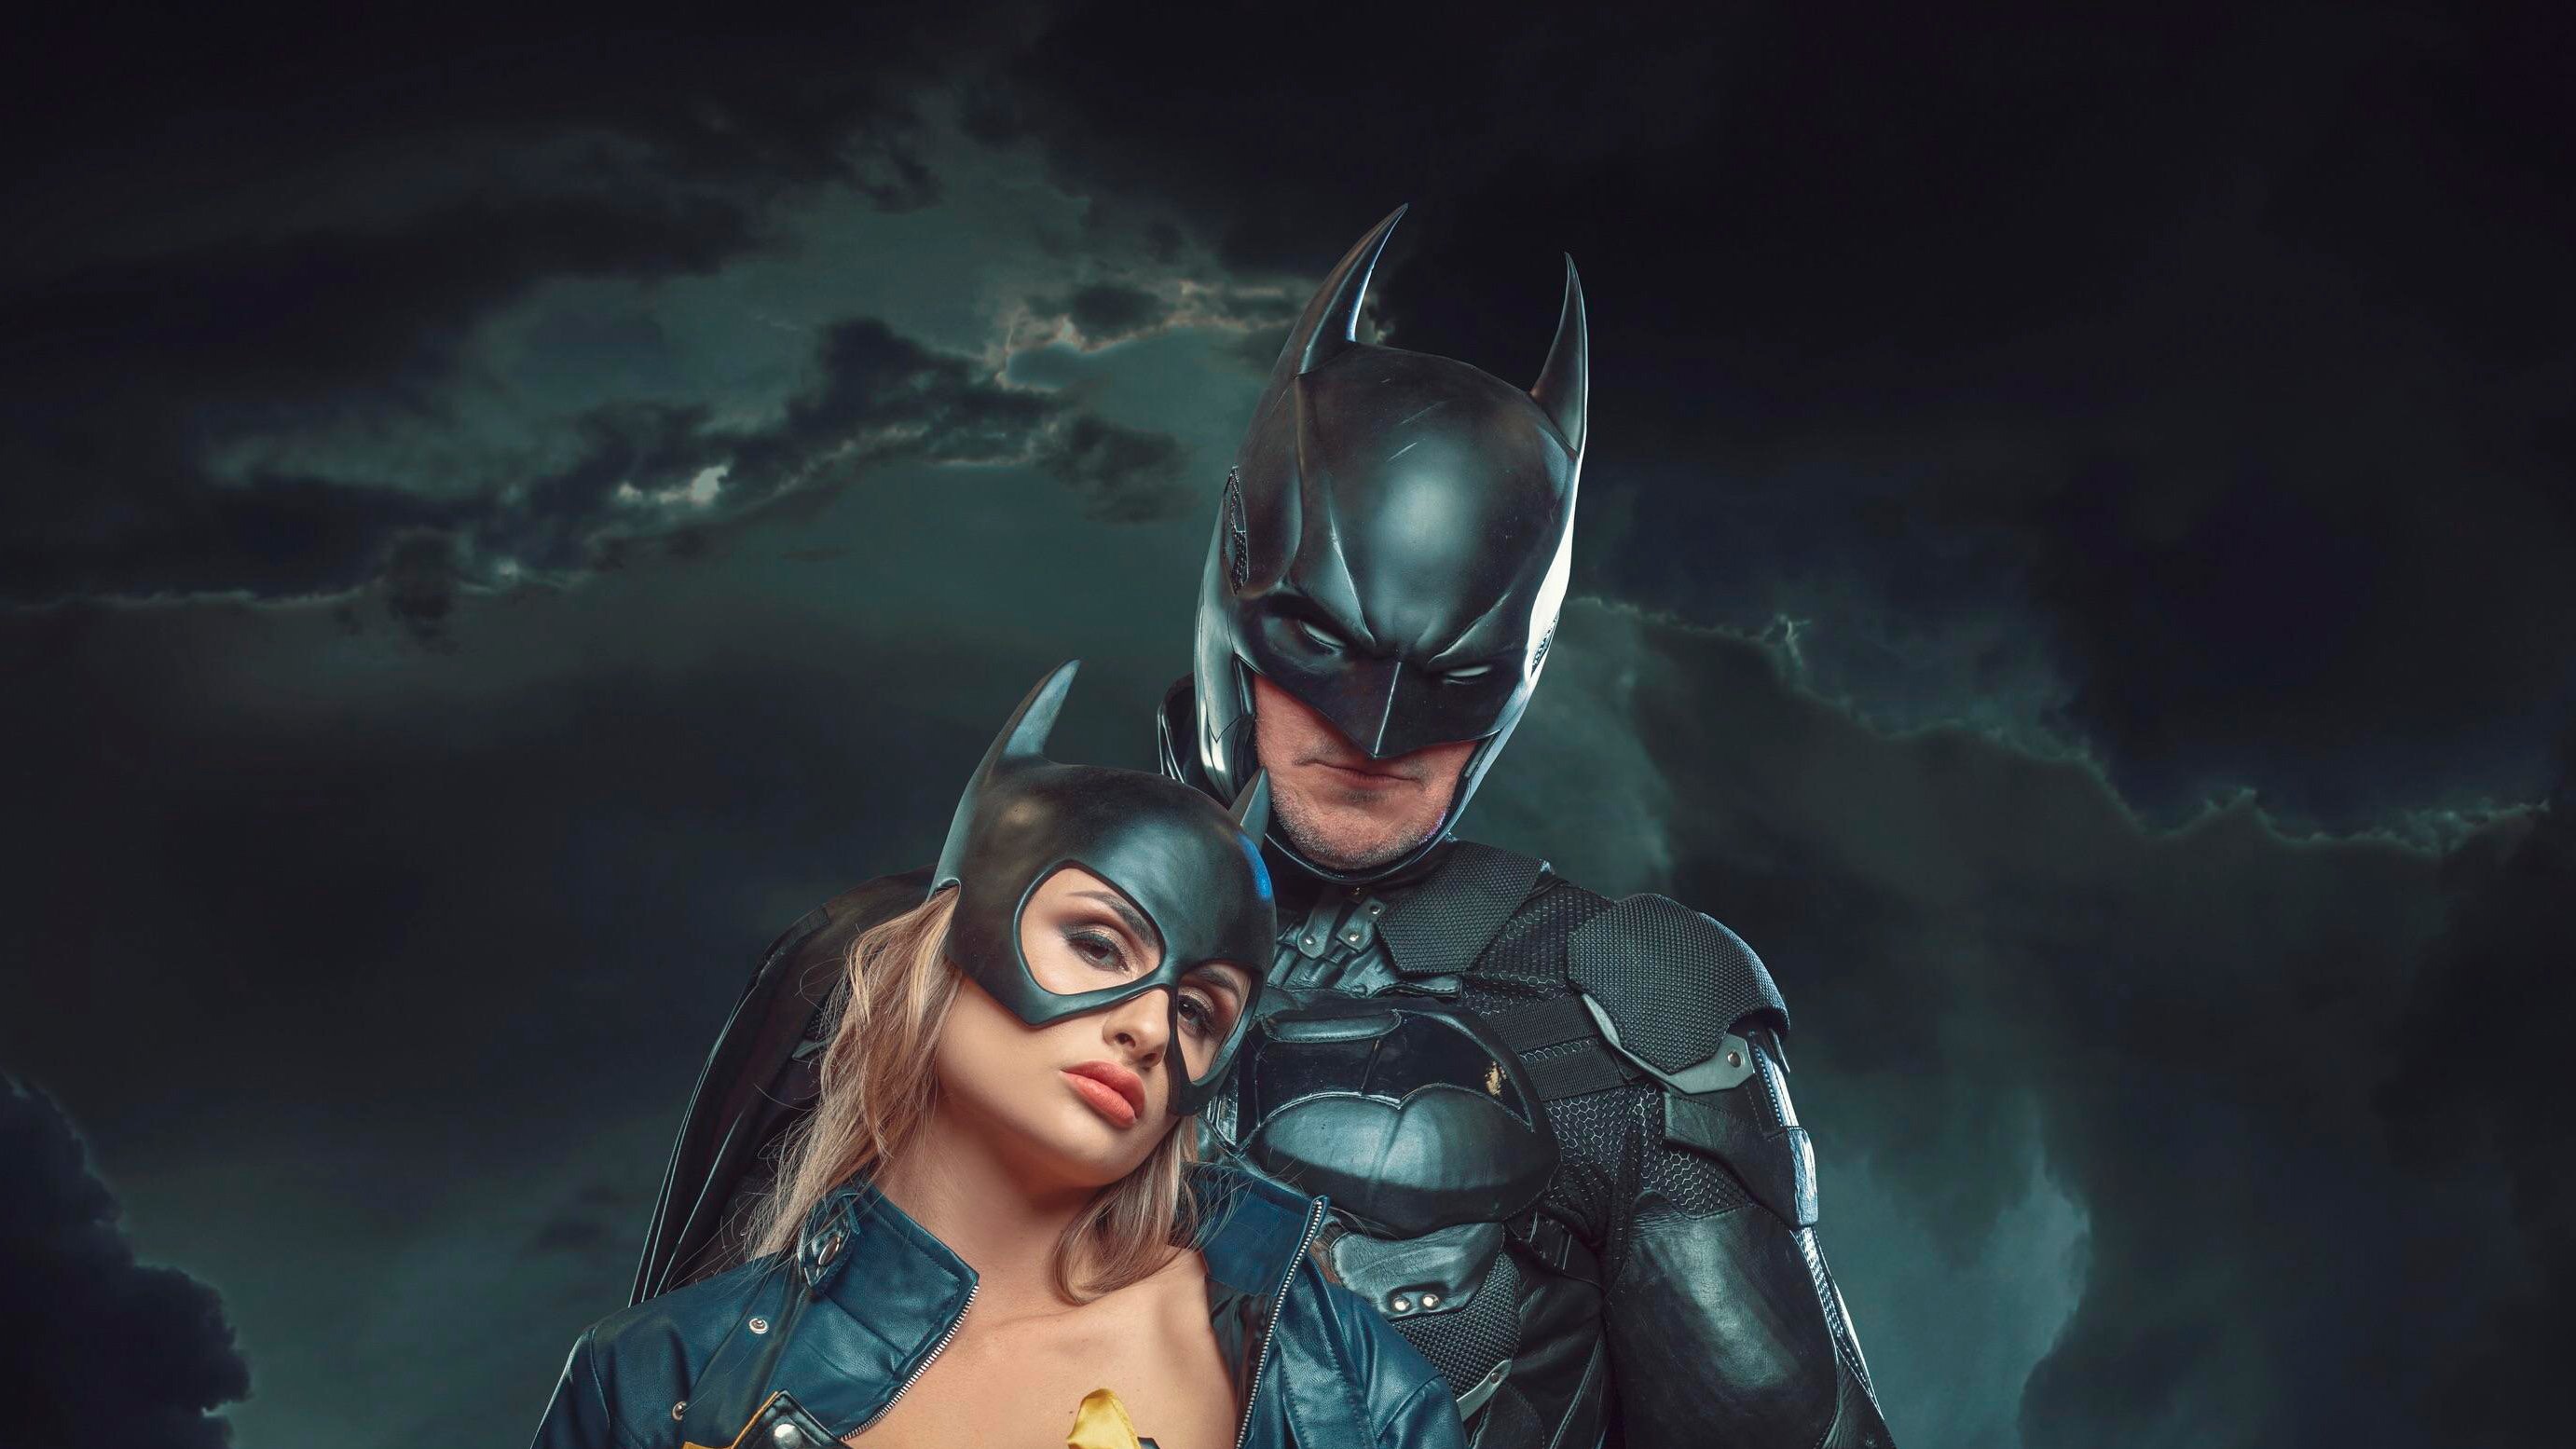 Batman Batgirl, HD Superheroes, 4k Wallpaper, Image, Background, Photo and Picture